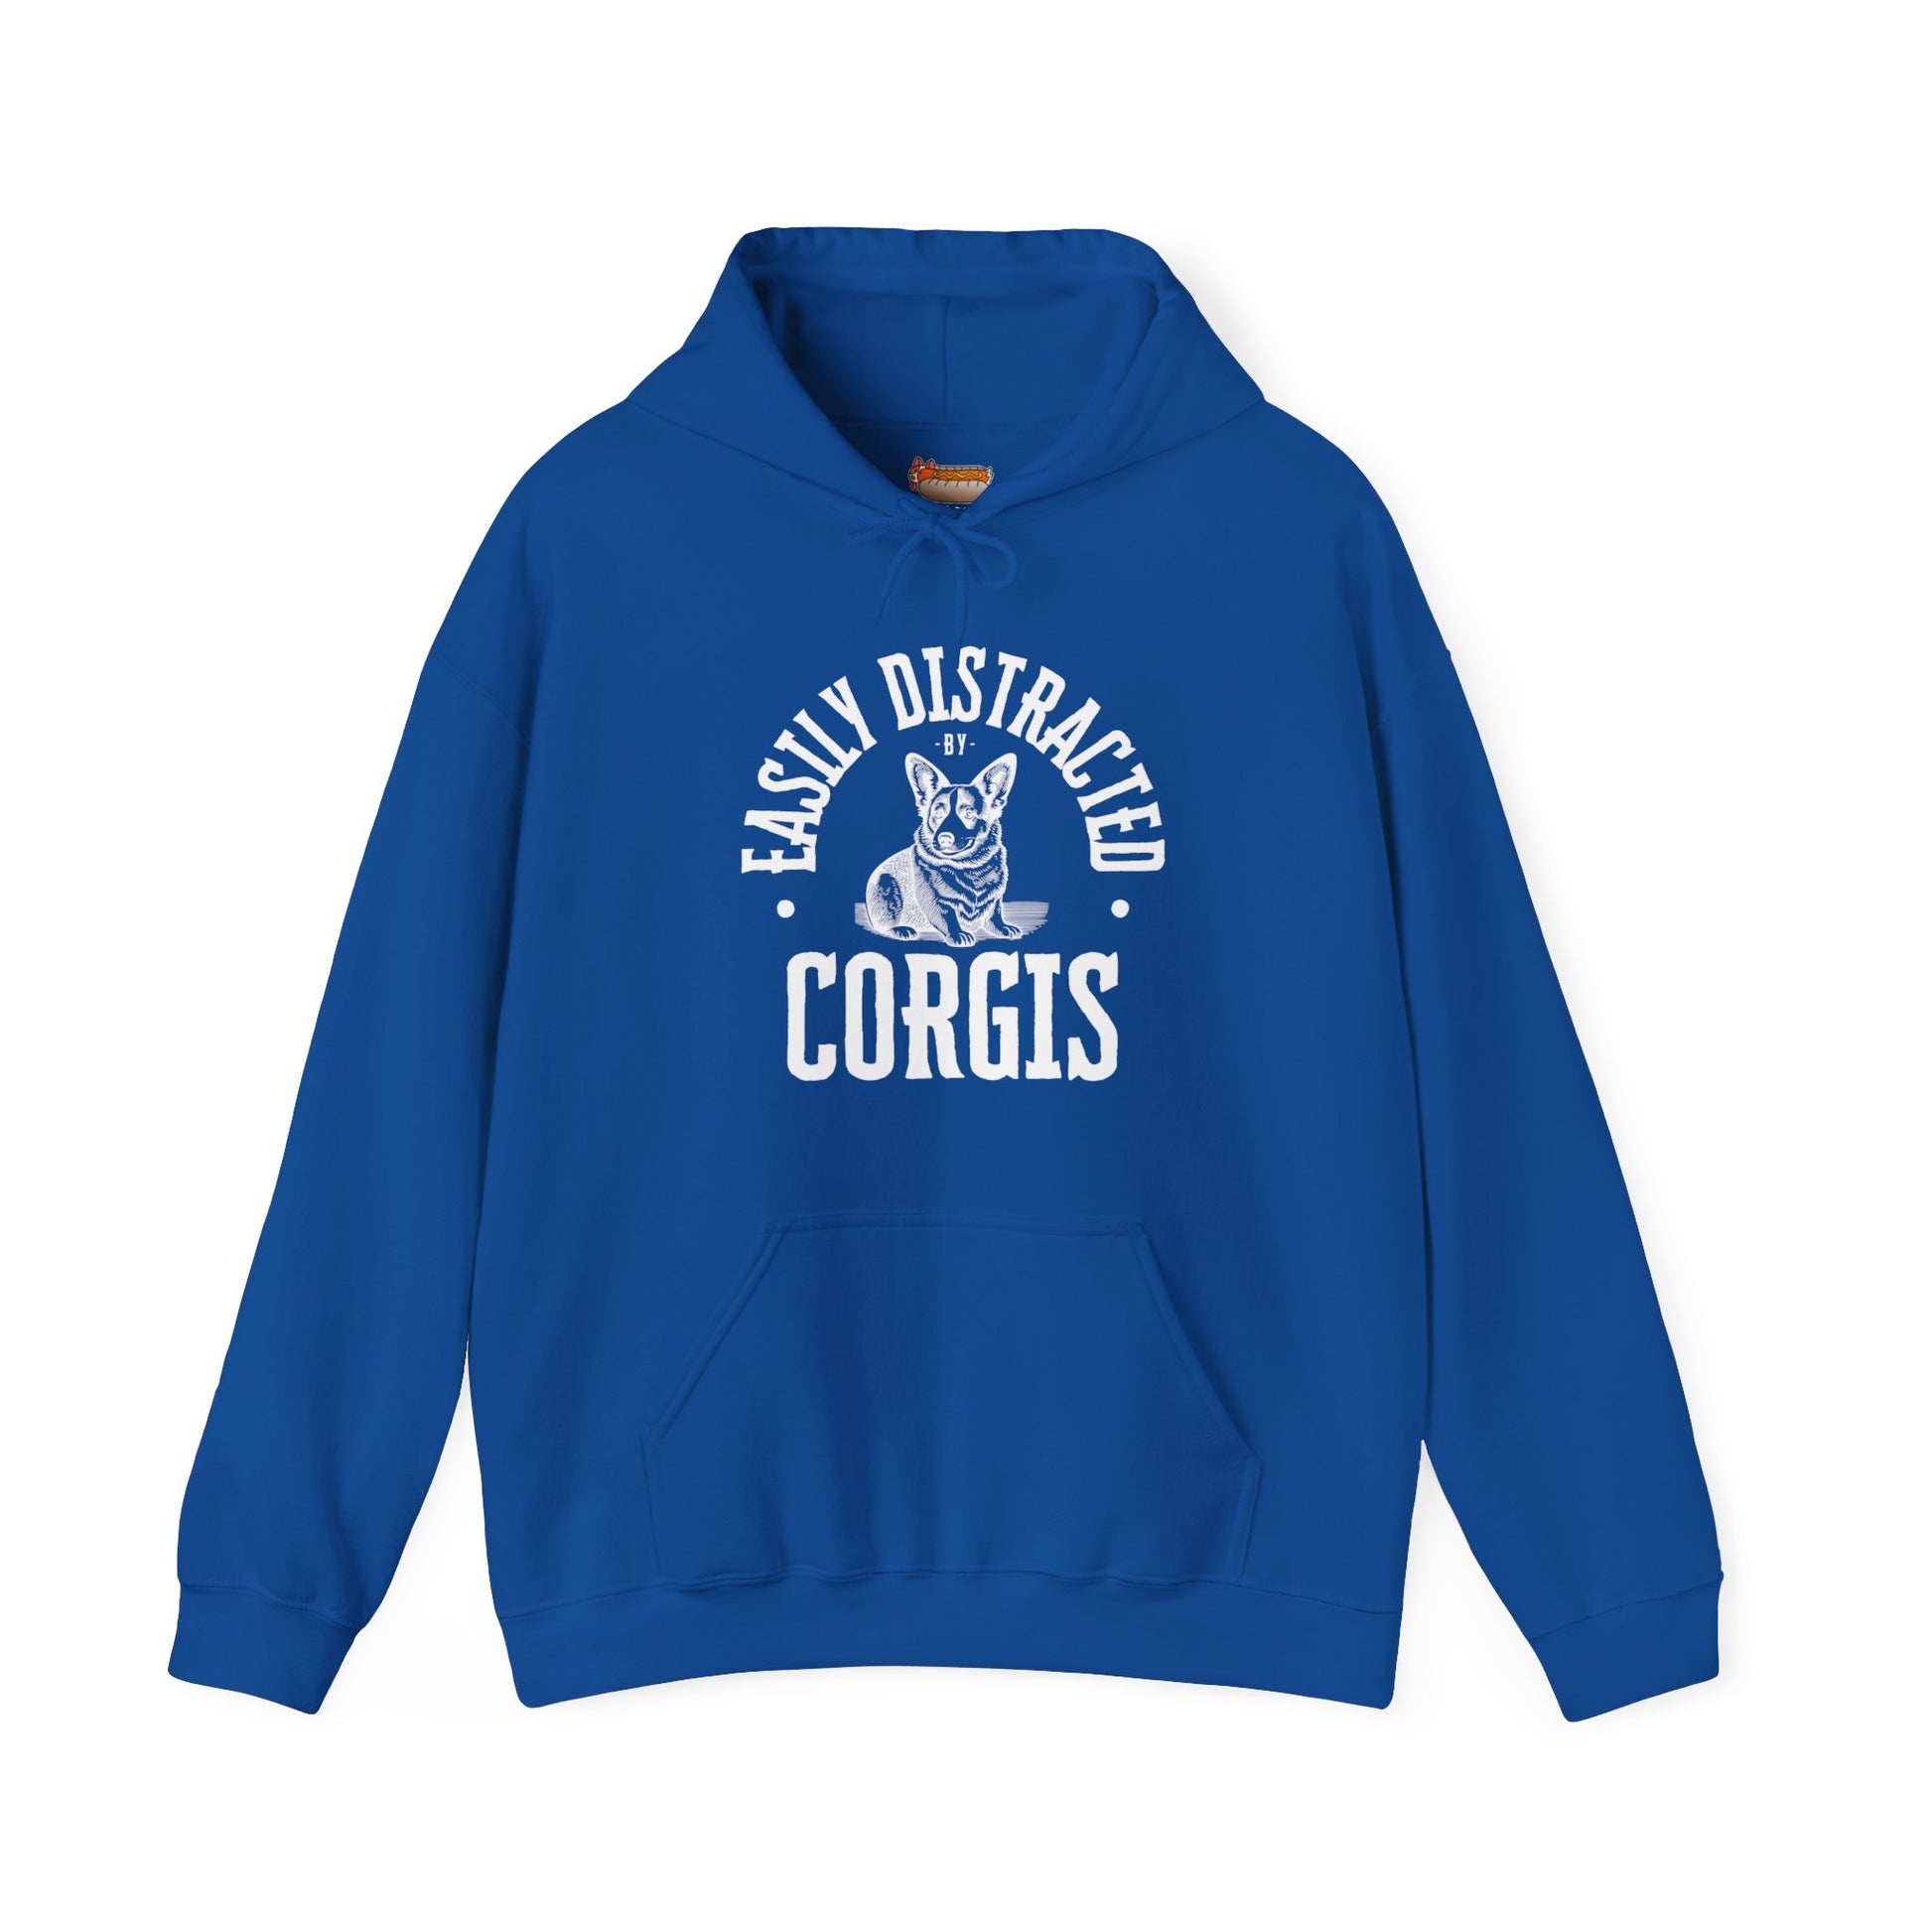 blue royal corgi hoodie easily distracted women men sweatshirt shirt